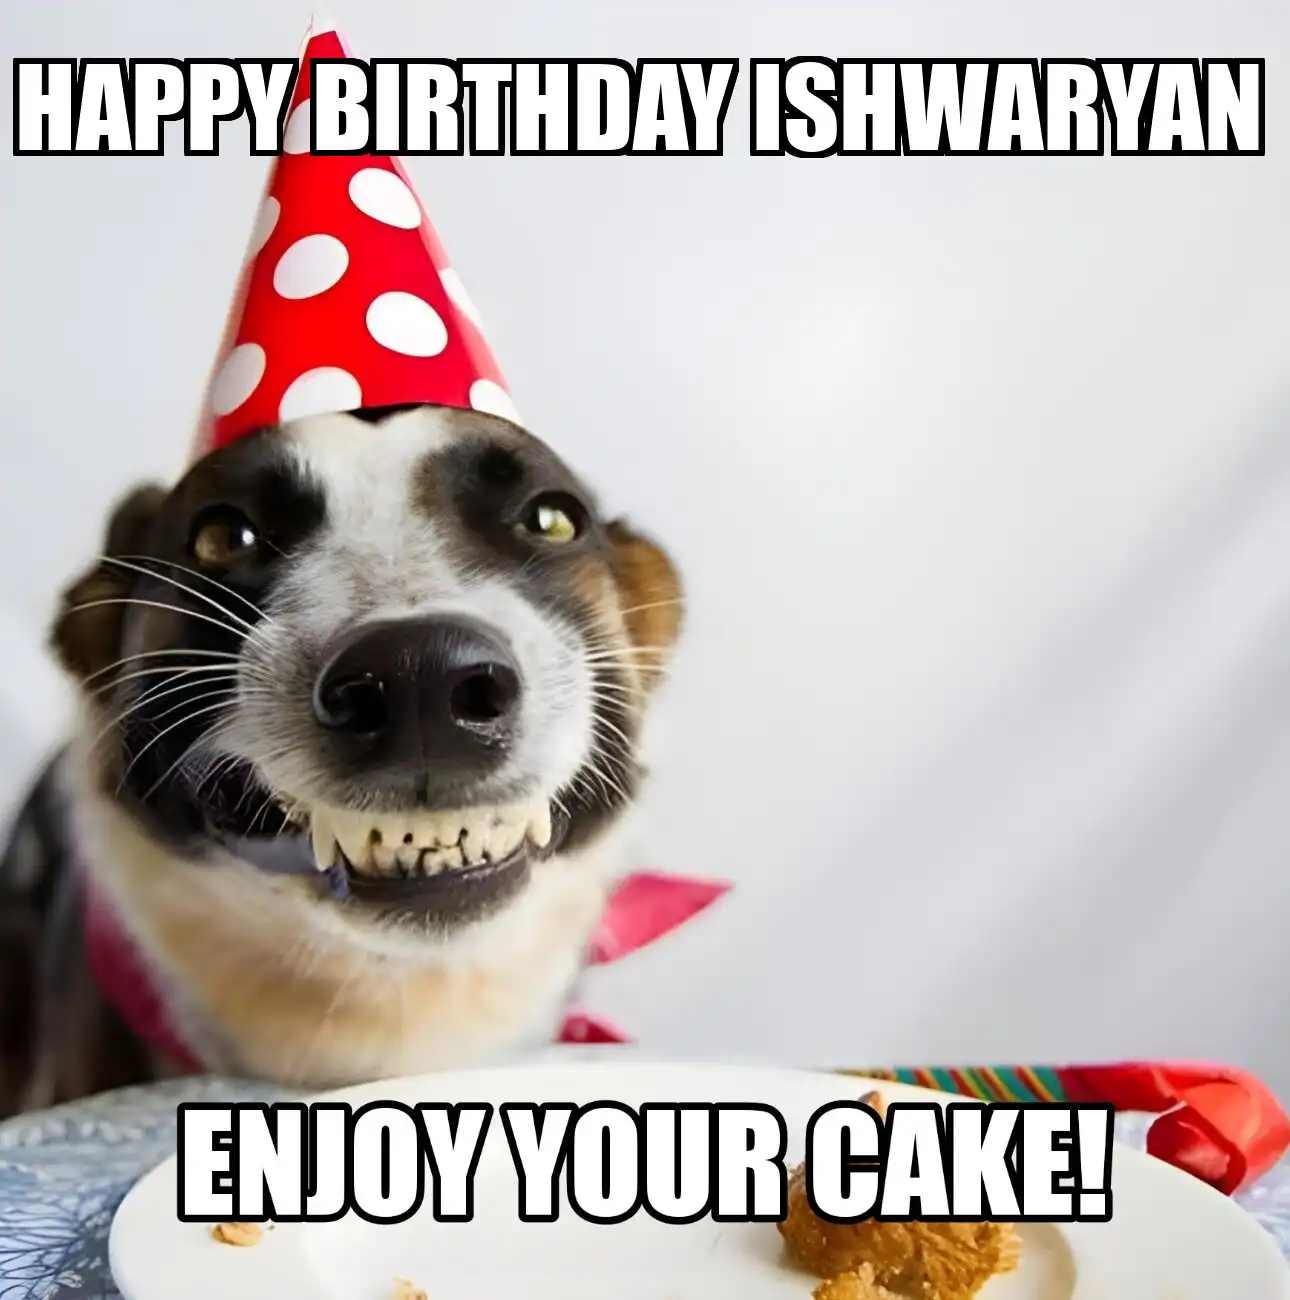 Happy Birthday Ishwaryan Enjoy Your Cake Dog Meme